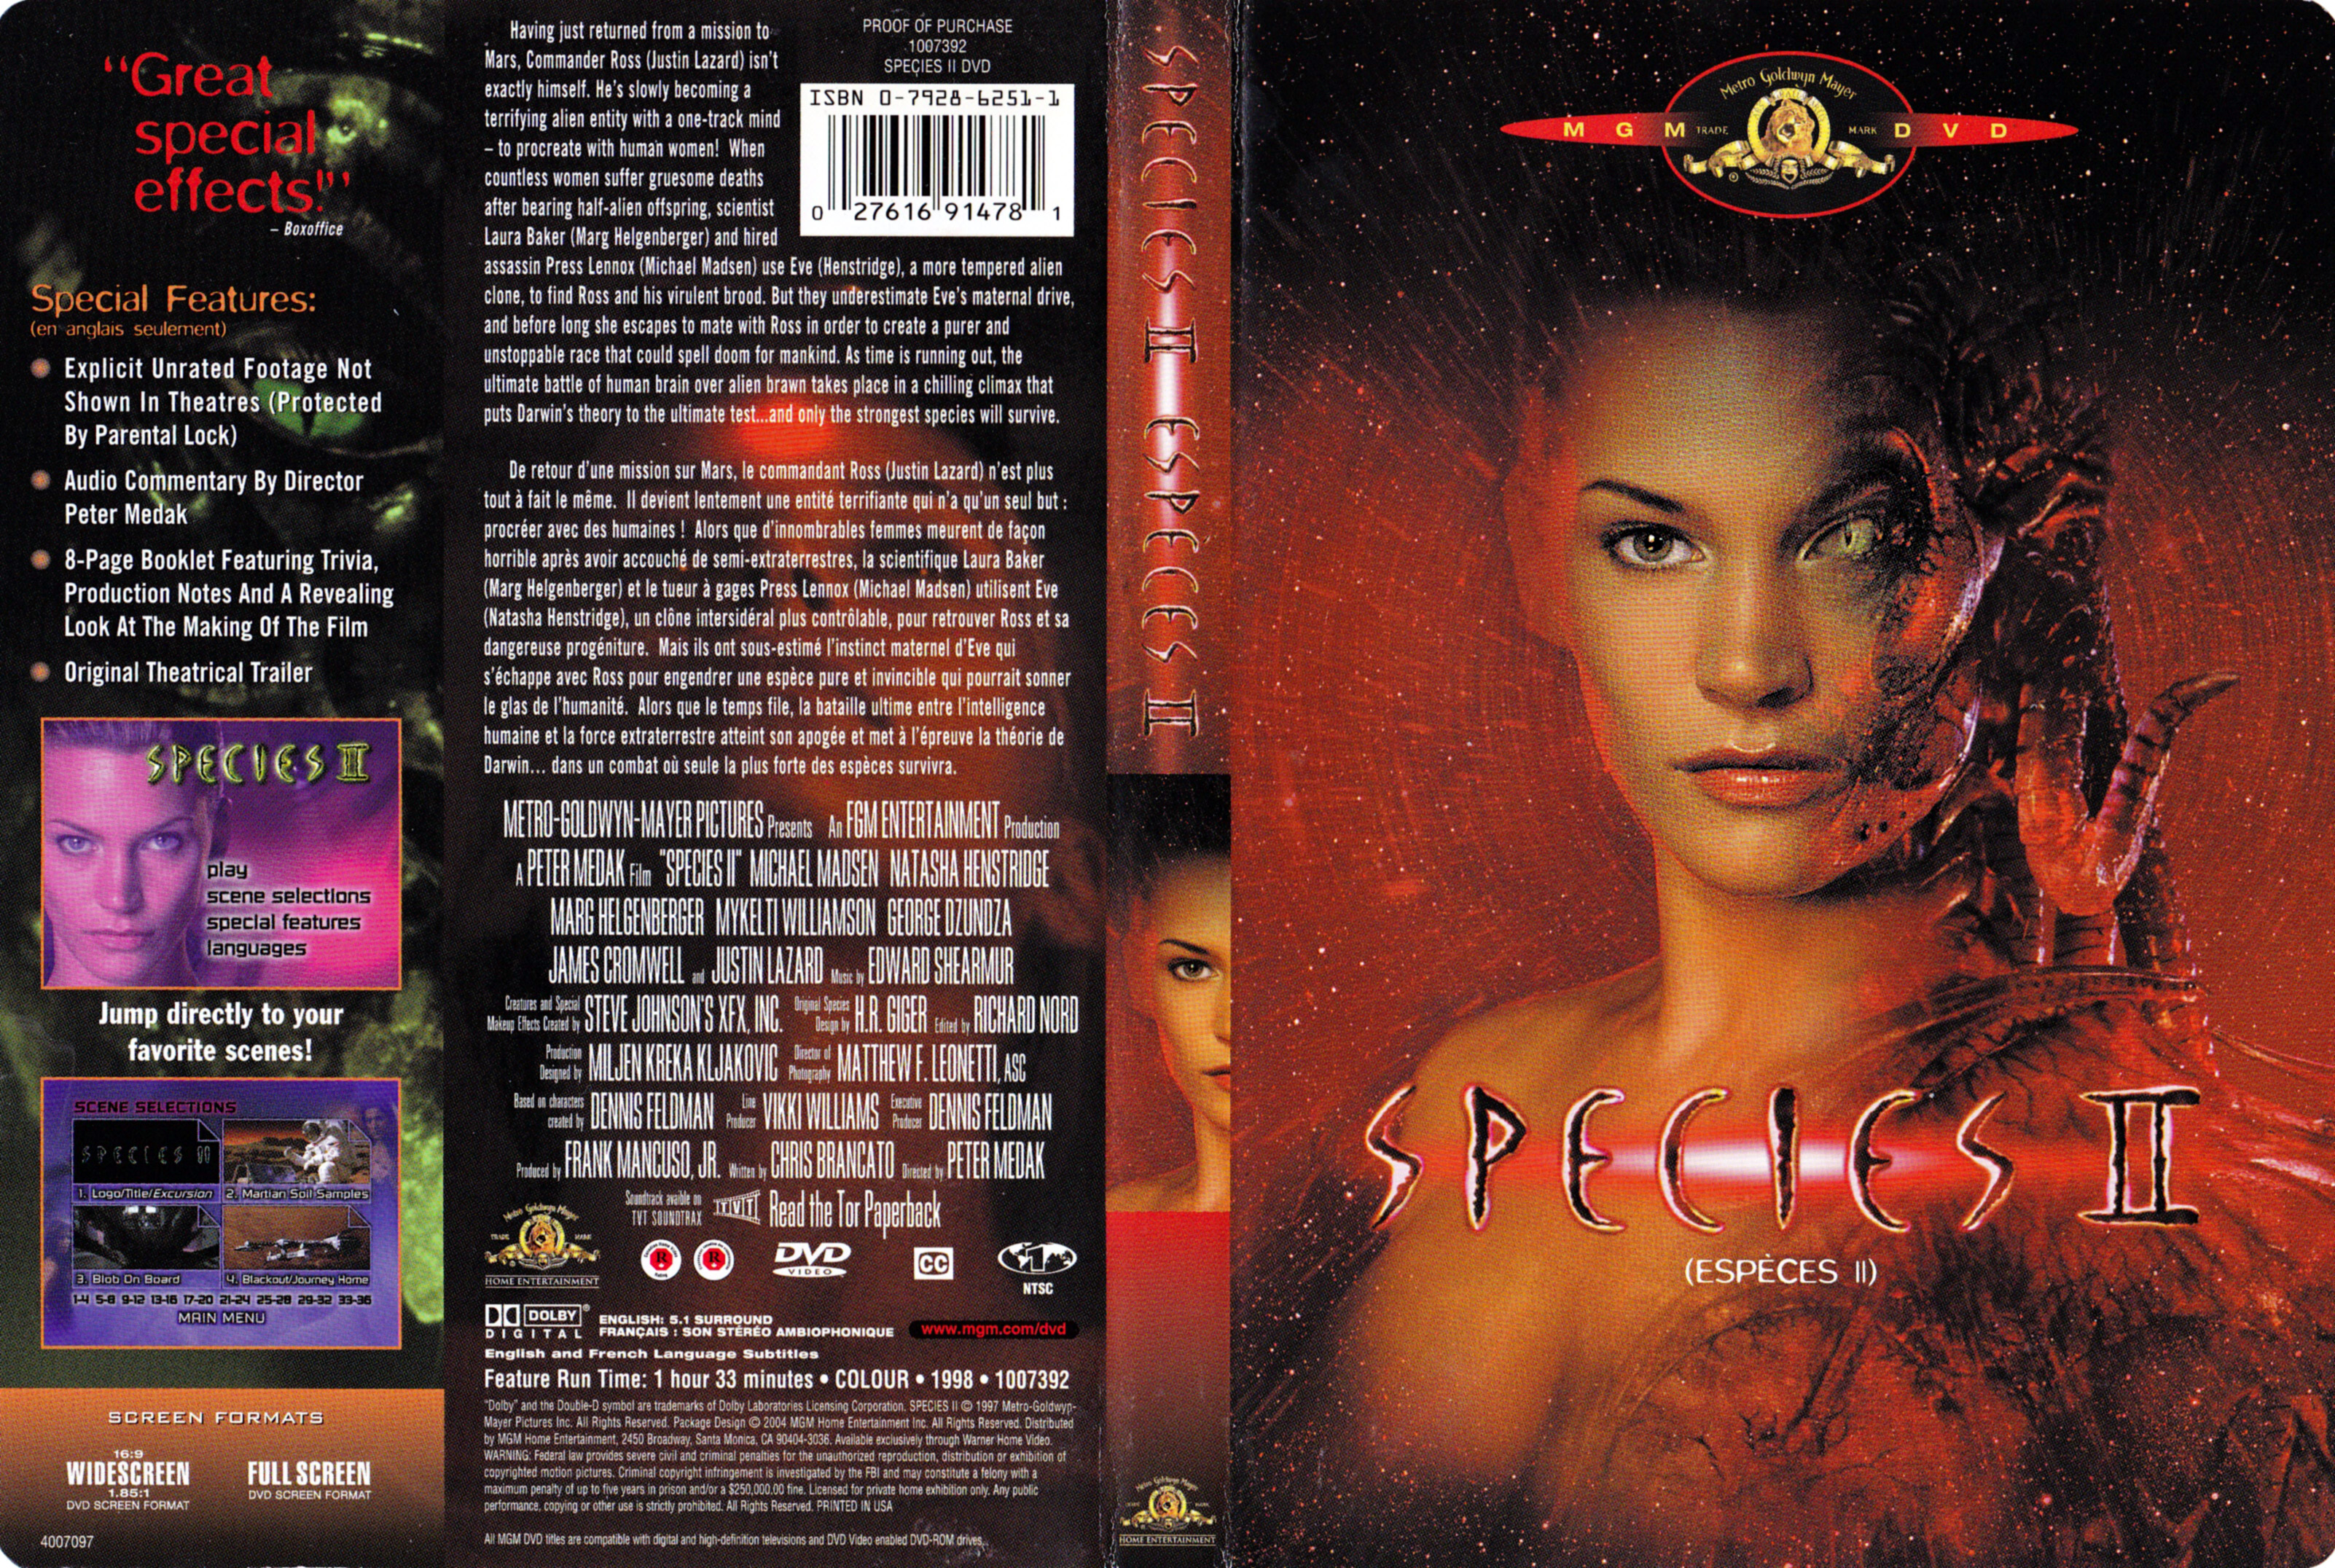 Jaquette DVD Espces 2 - Species 2 (Canadienne)